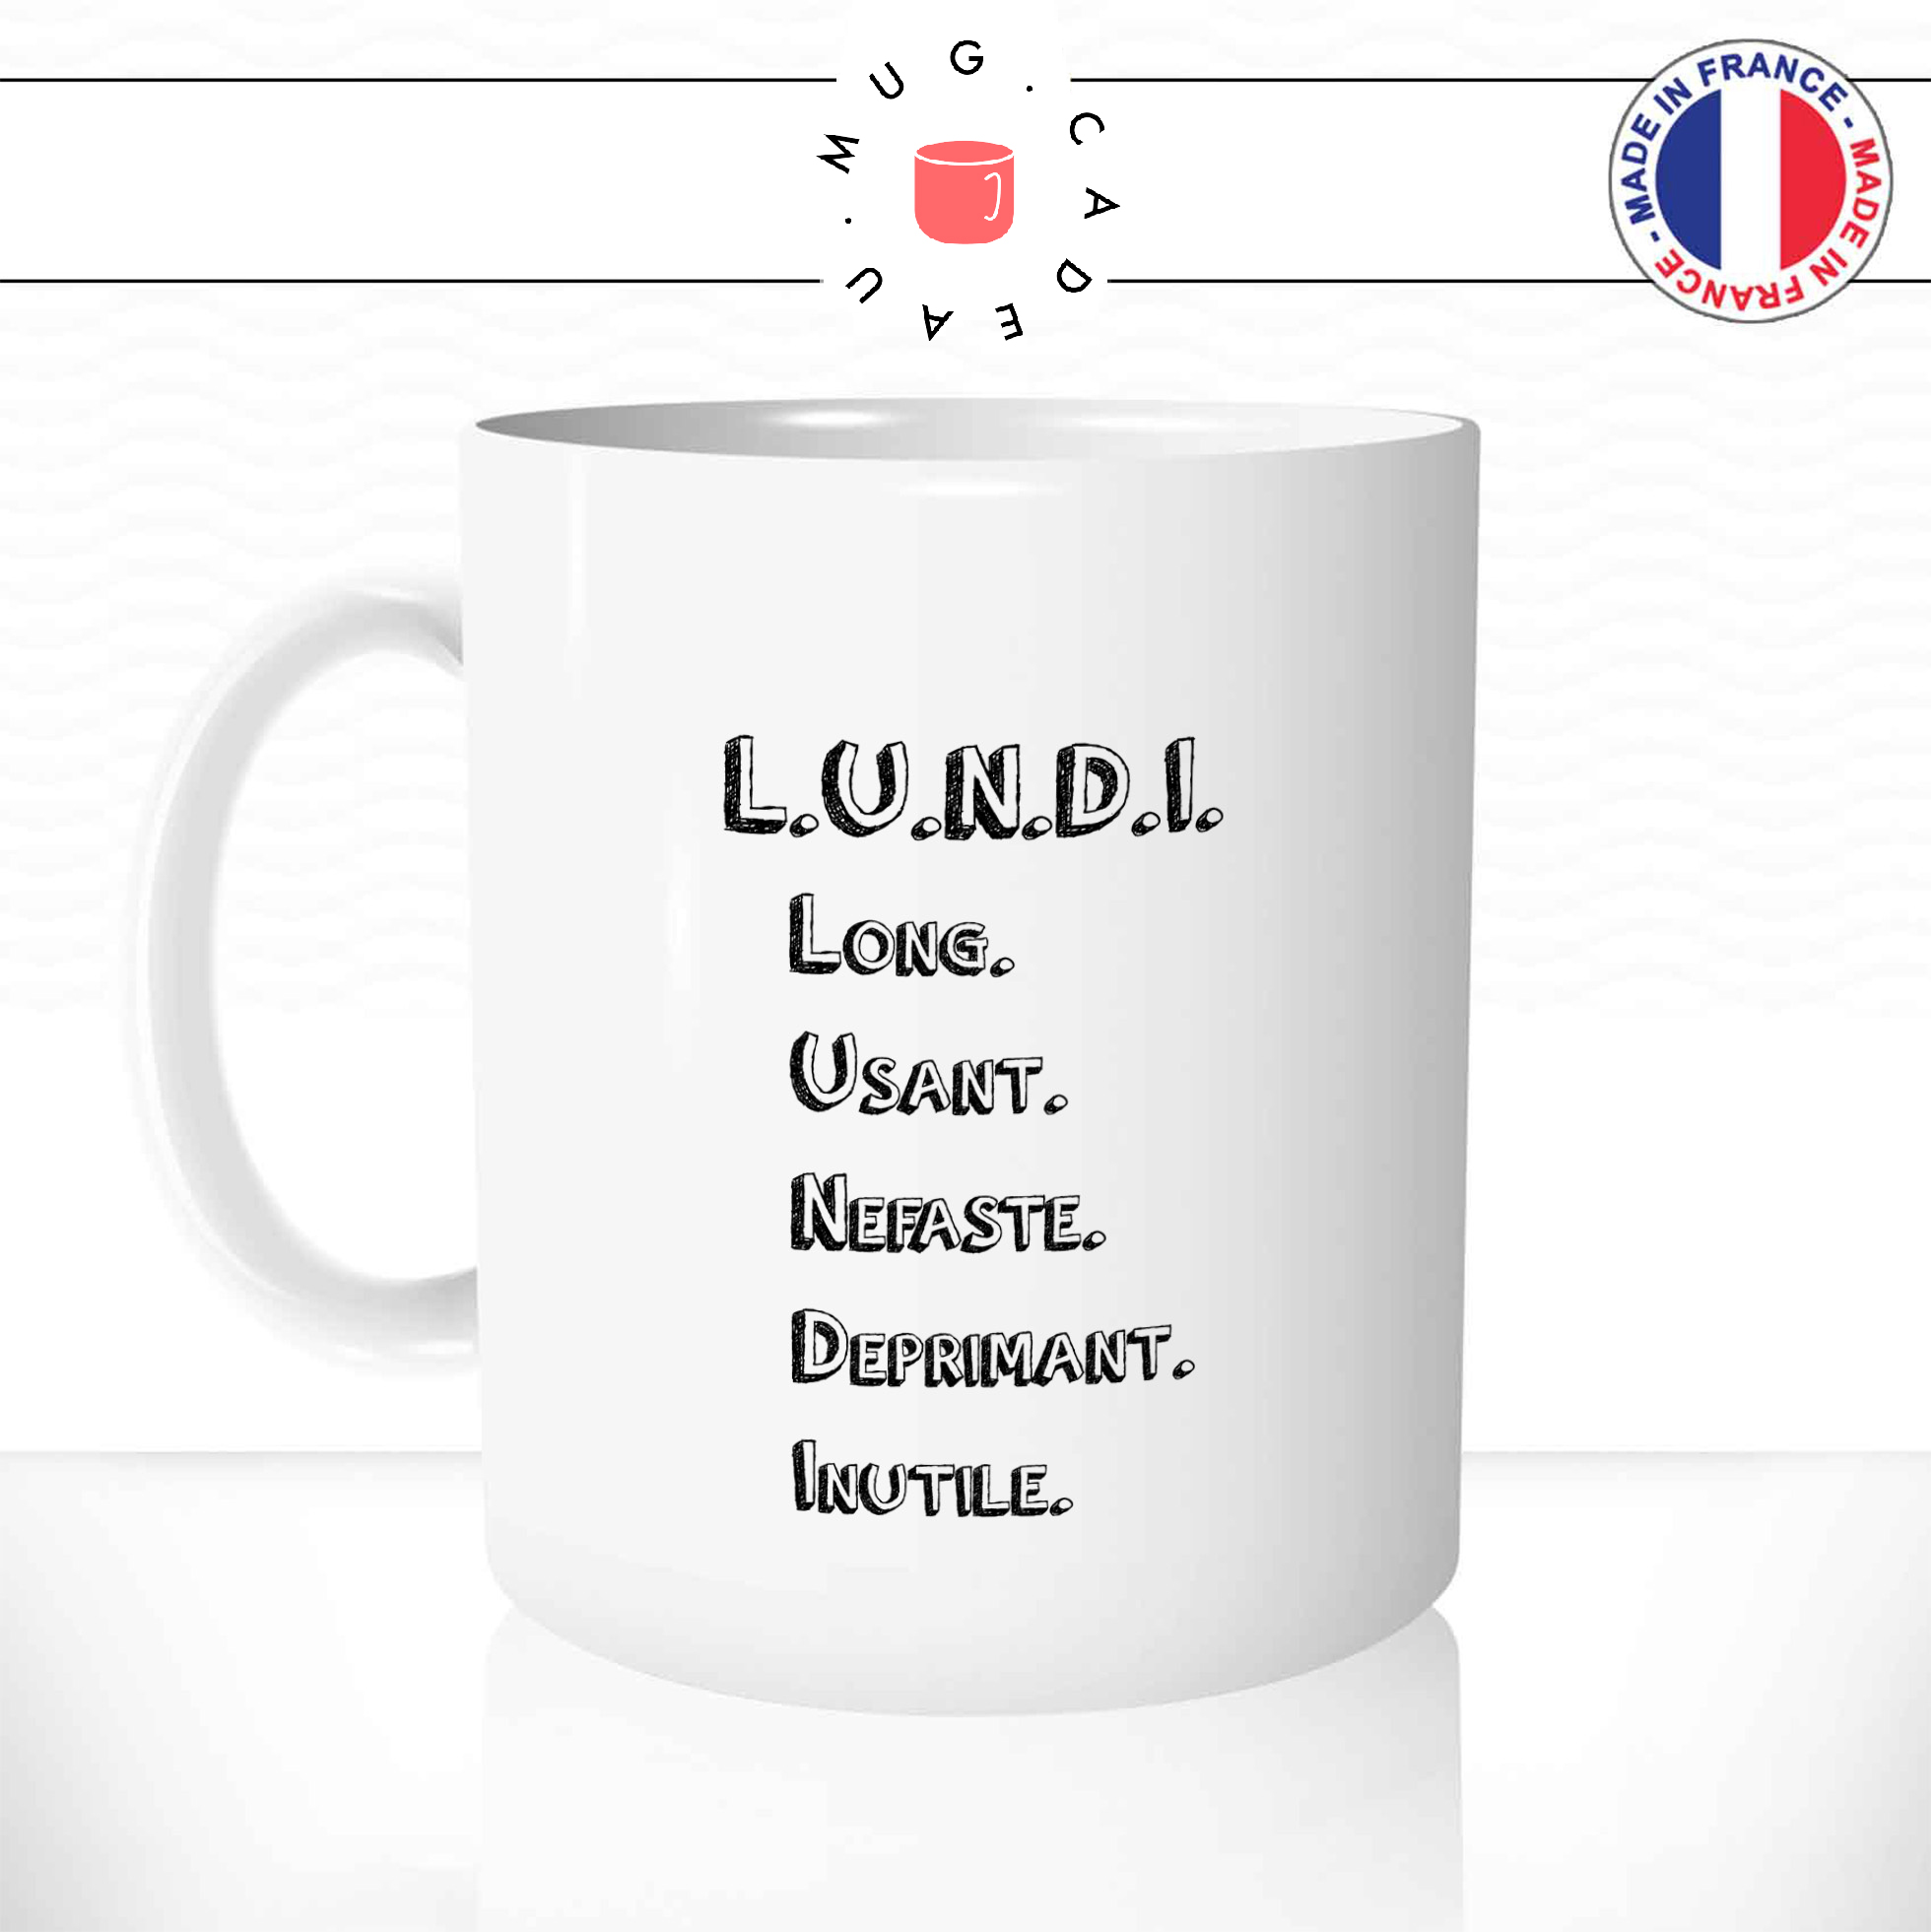 mug-tasse-ref47-citation-drole-lundi-long-usant-cafe-the-mugs-tasses-personnalise-anse-gauche